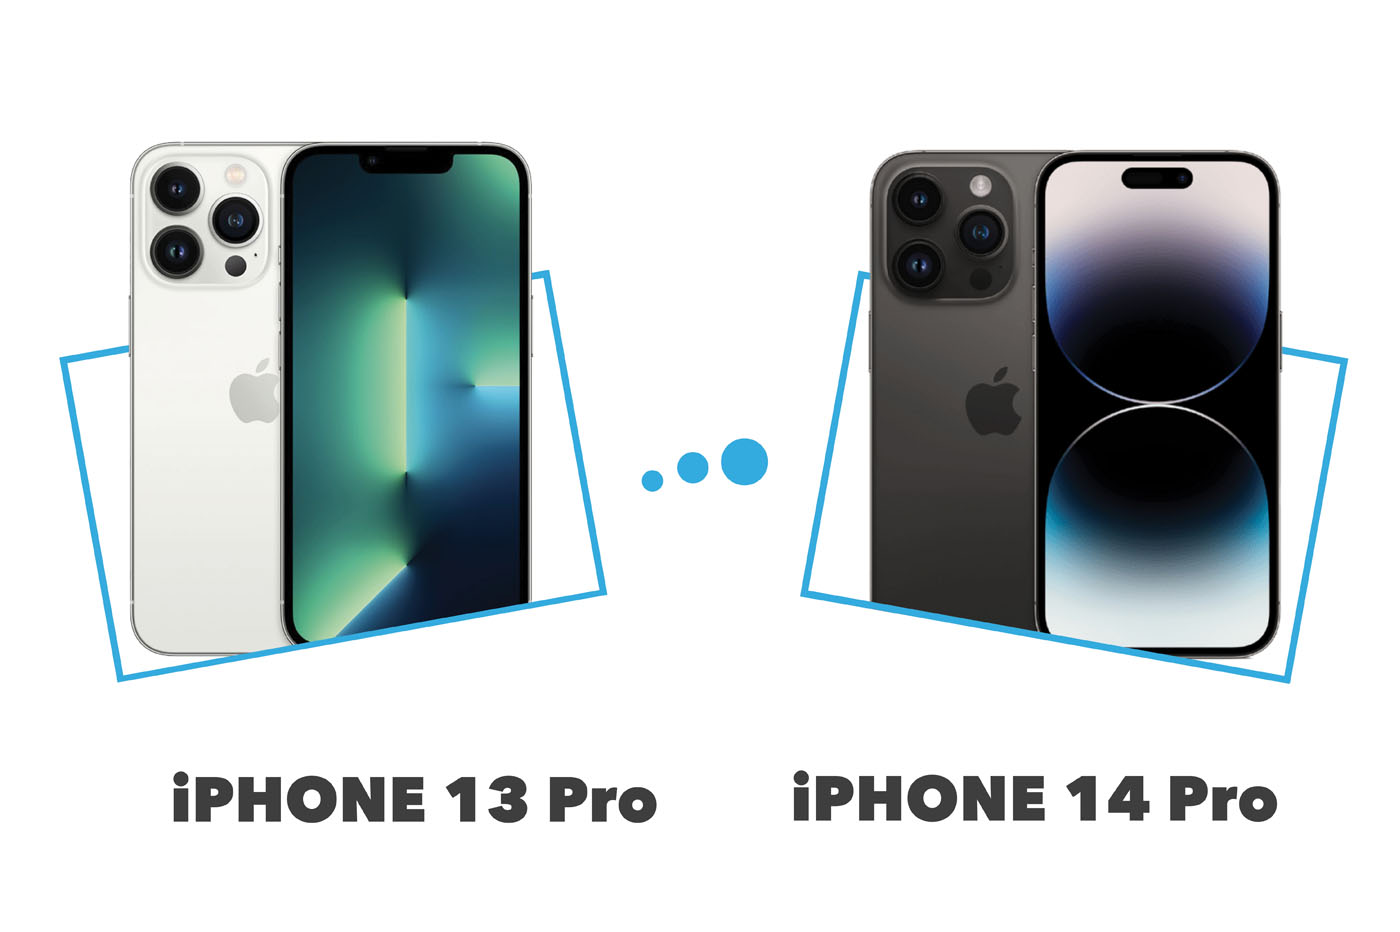 iPhone 14 Pro vs iPhone 13 Pro - Cameras compared - Amateur